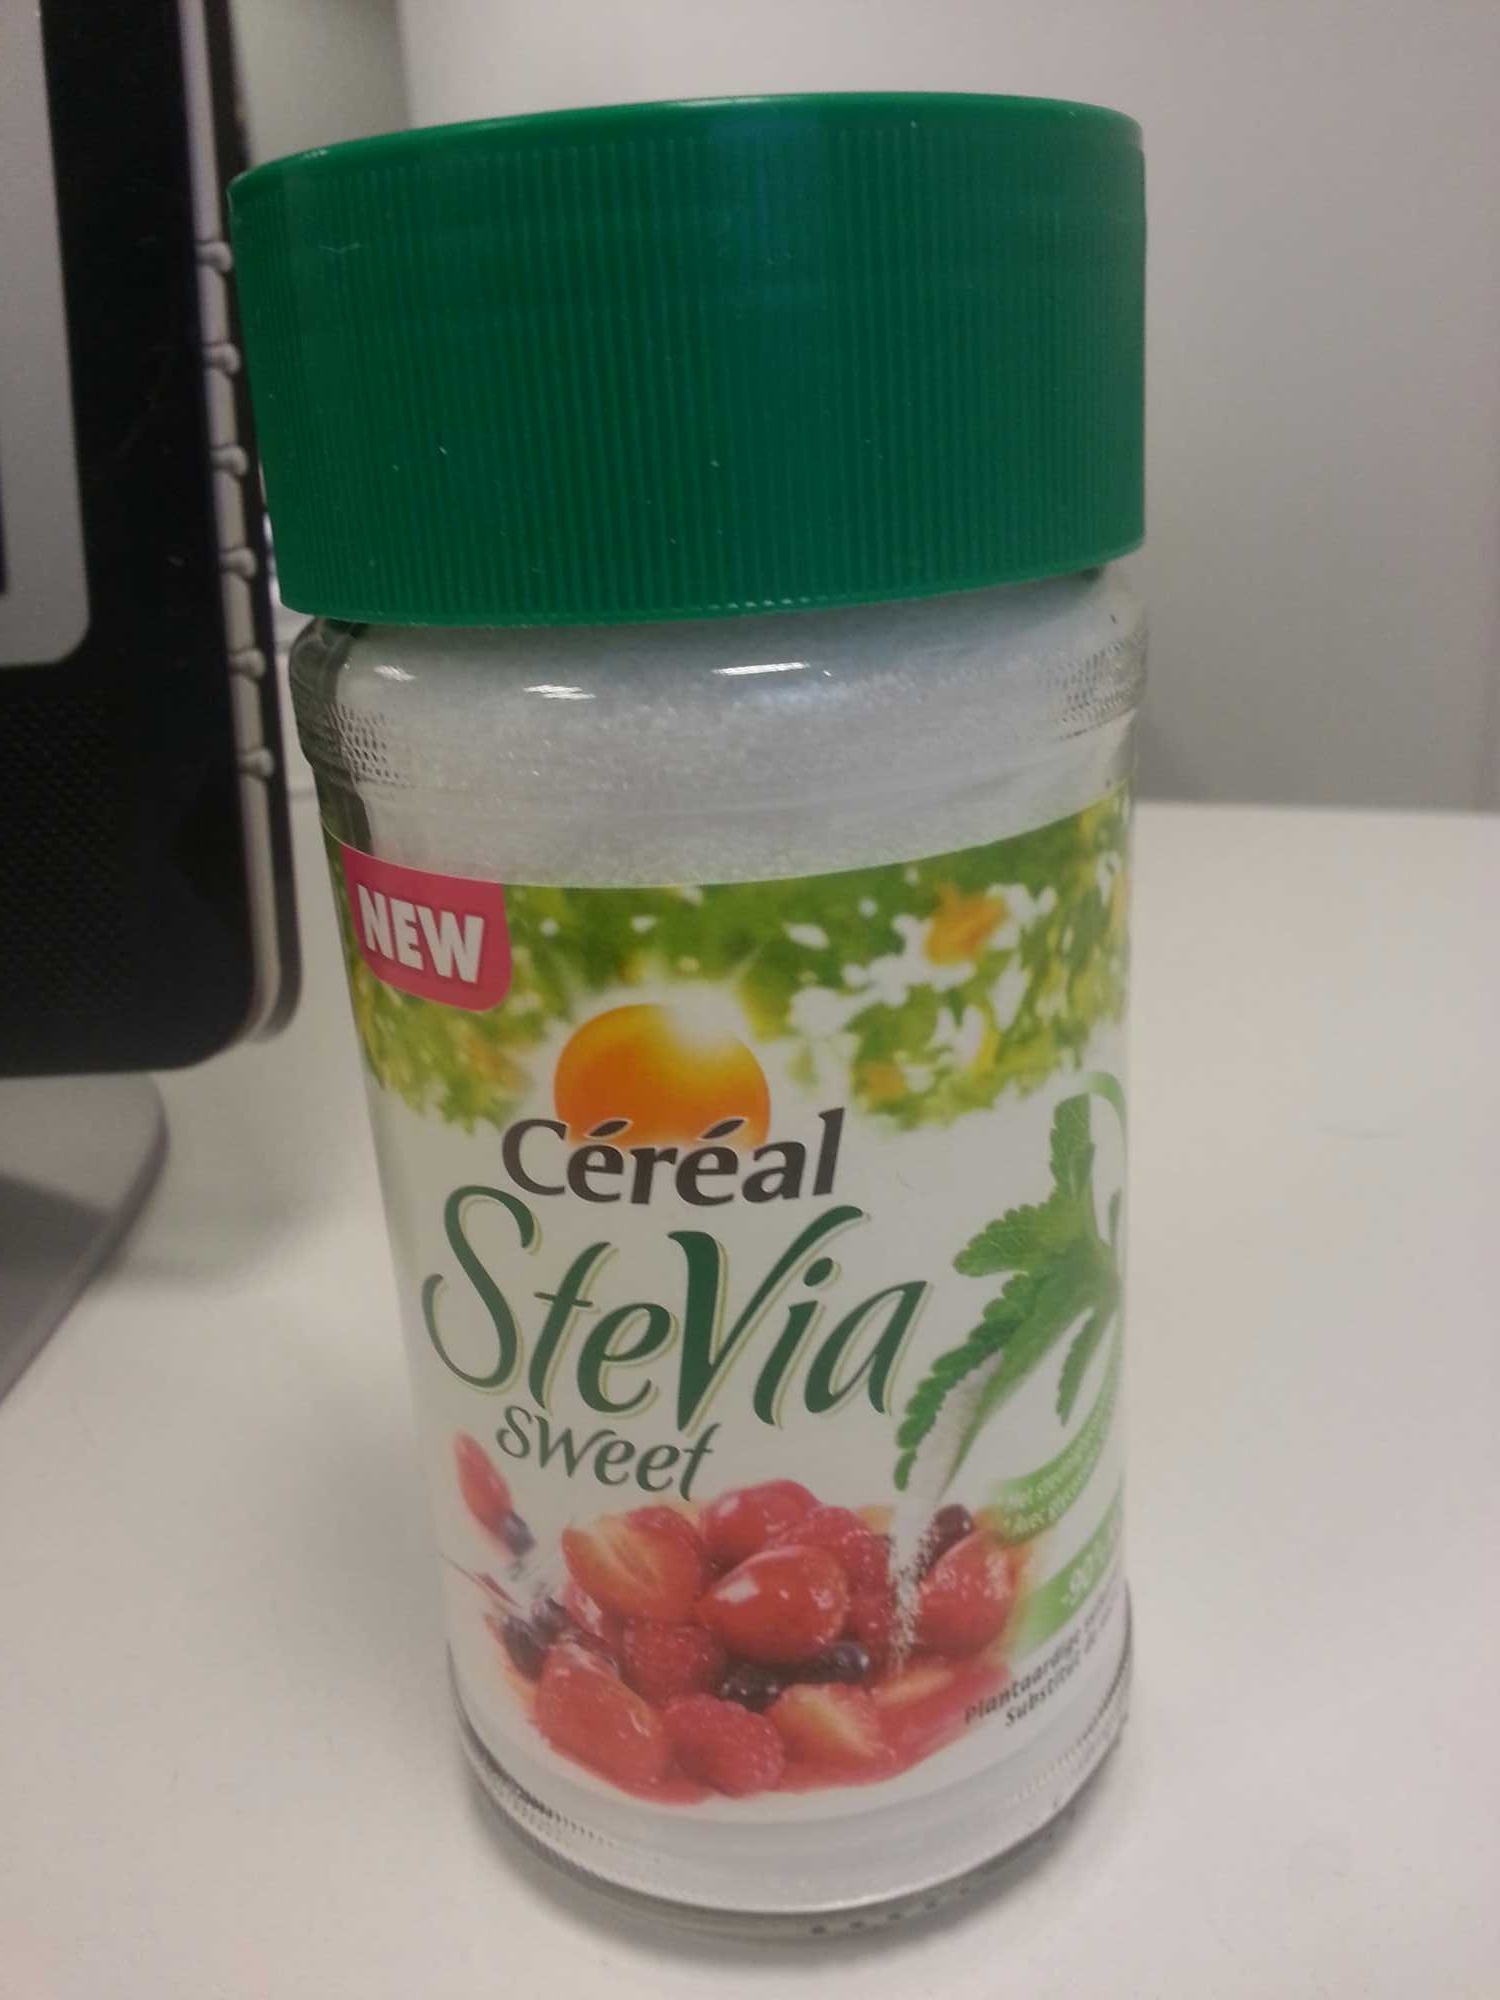 Céréal Stevia sweet - Produit